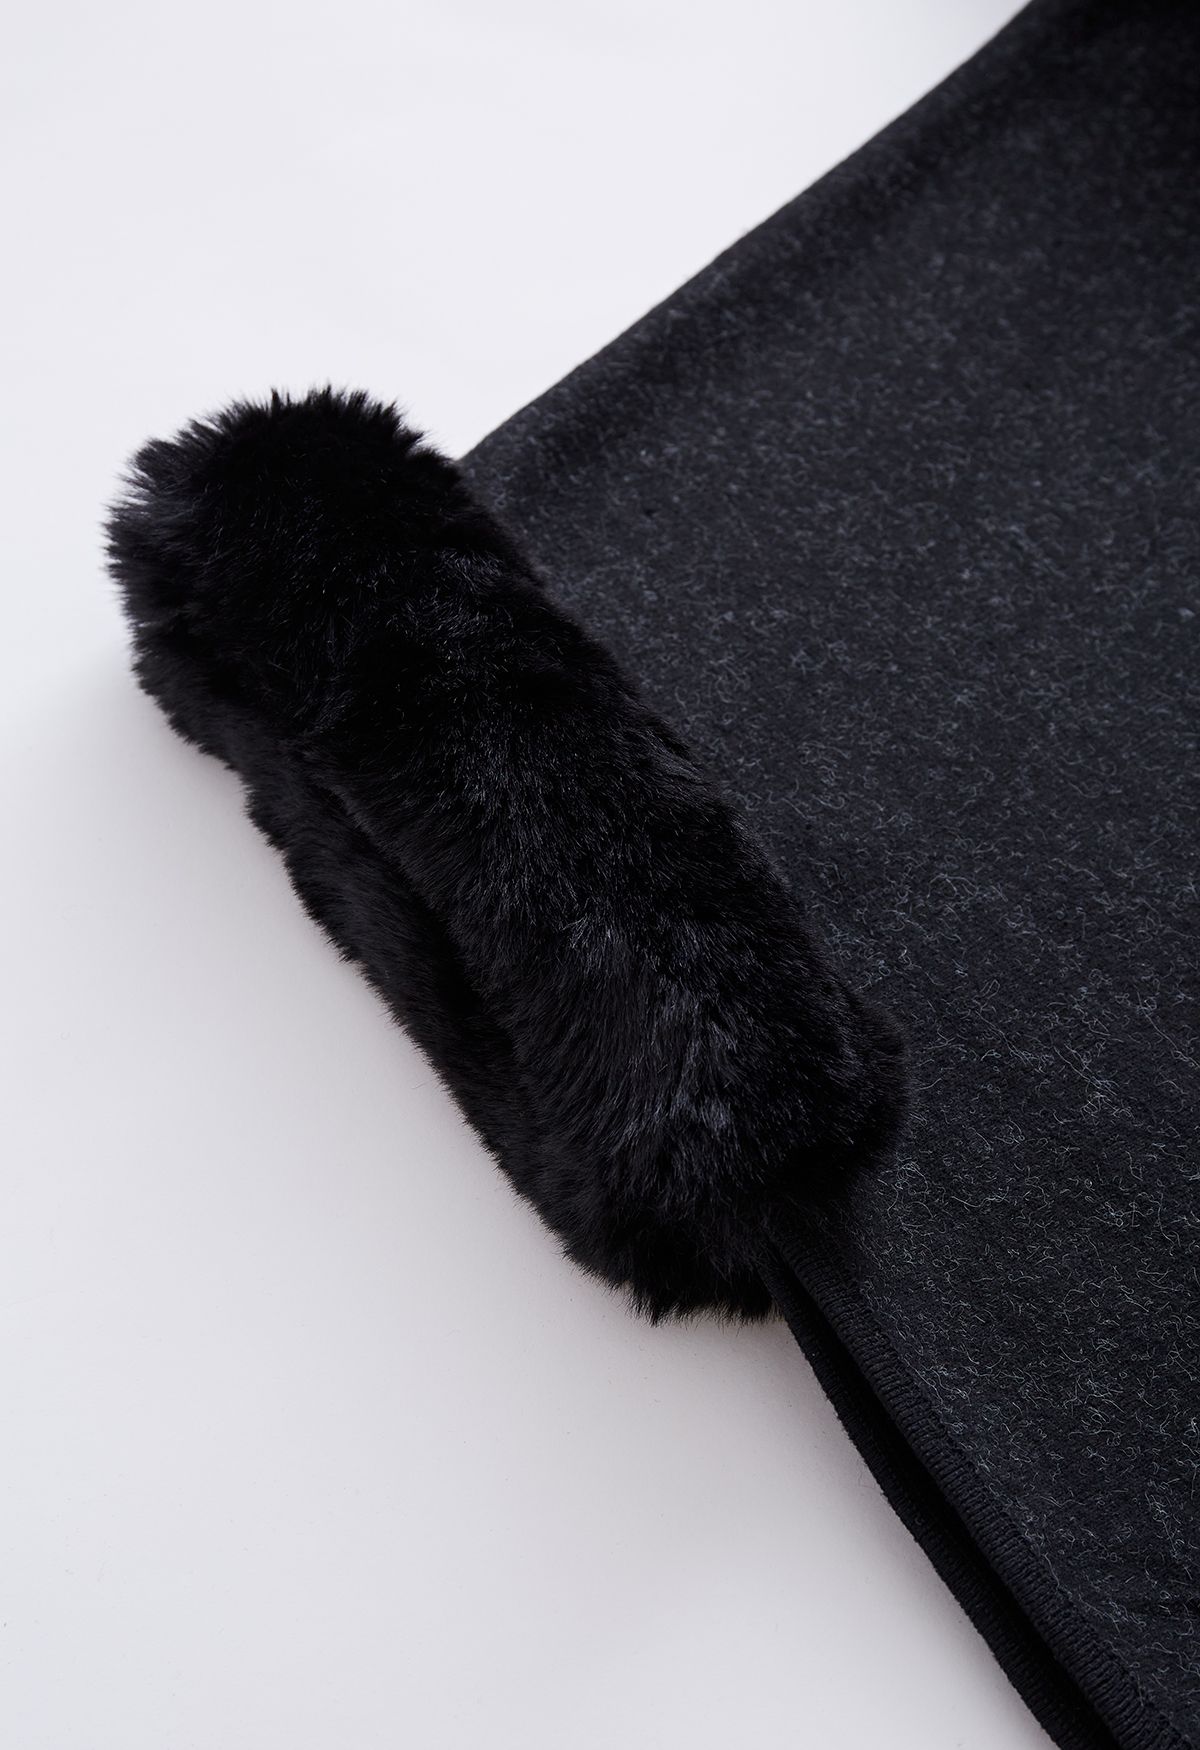 Cozy Faux Fur Hooded Poncho in Black